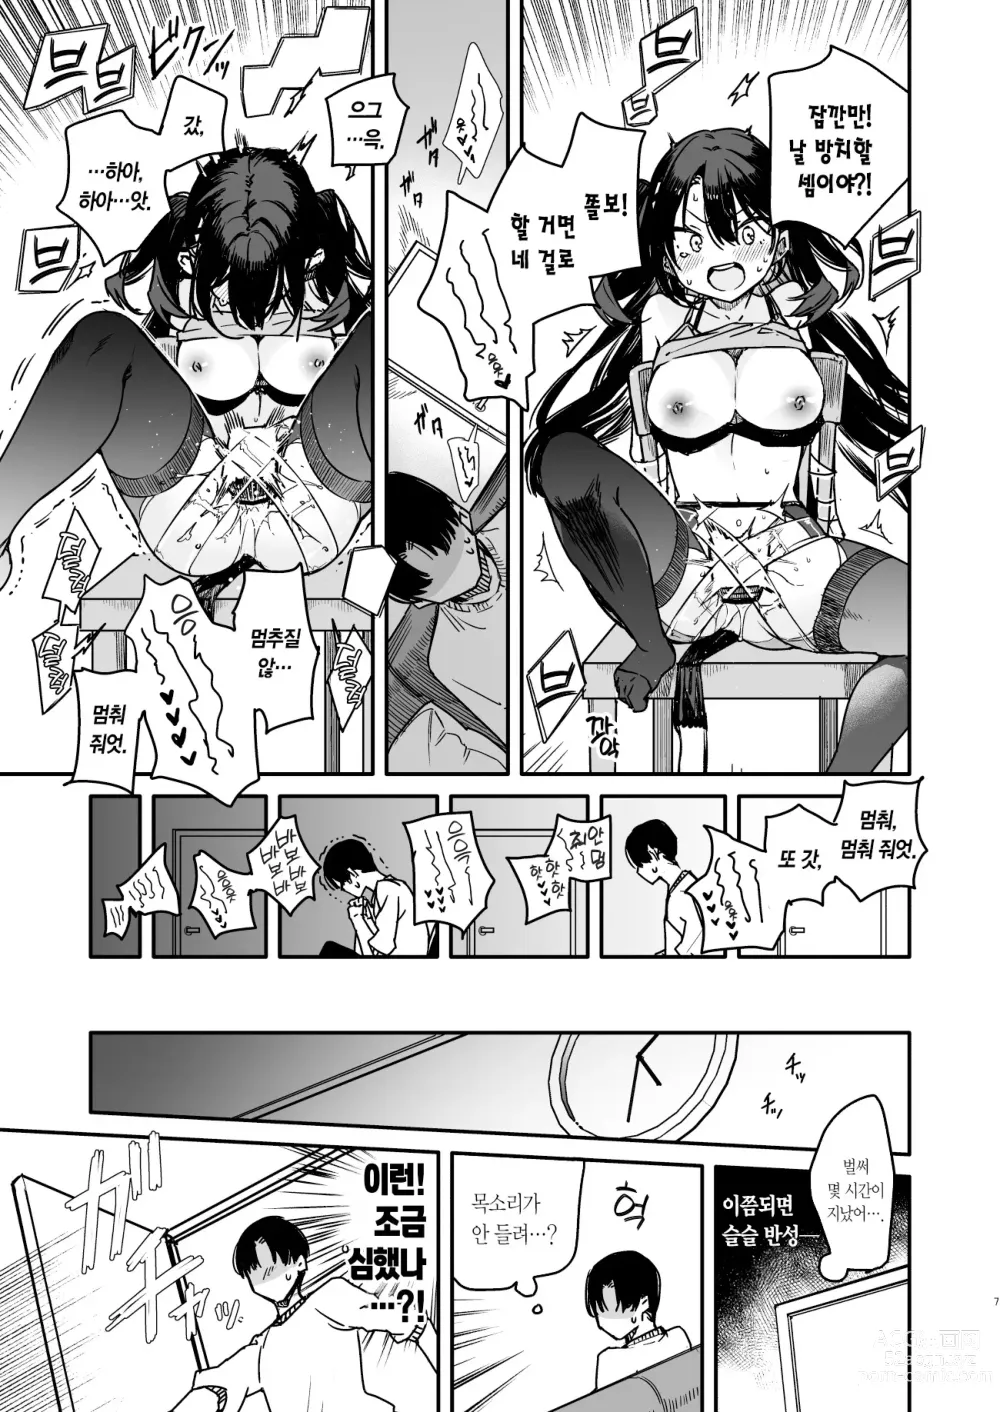 Page 7 of doujinshi 건방떠는 그녀에게 긁히면서 온종일 강제쾌락절정 참교육 섹스